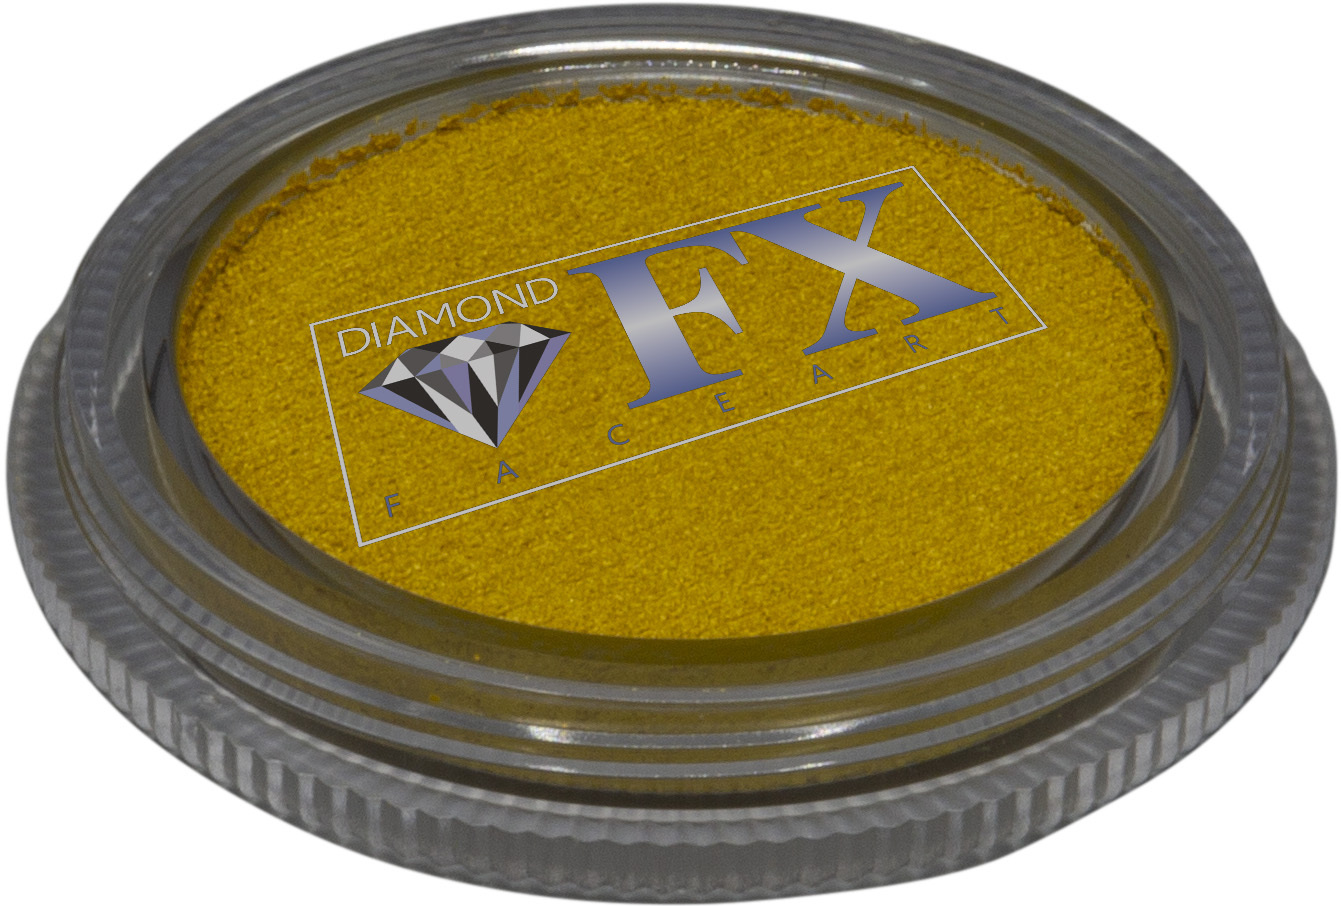 Diamond FX Gold 30g - Small Image